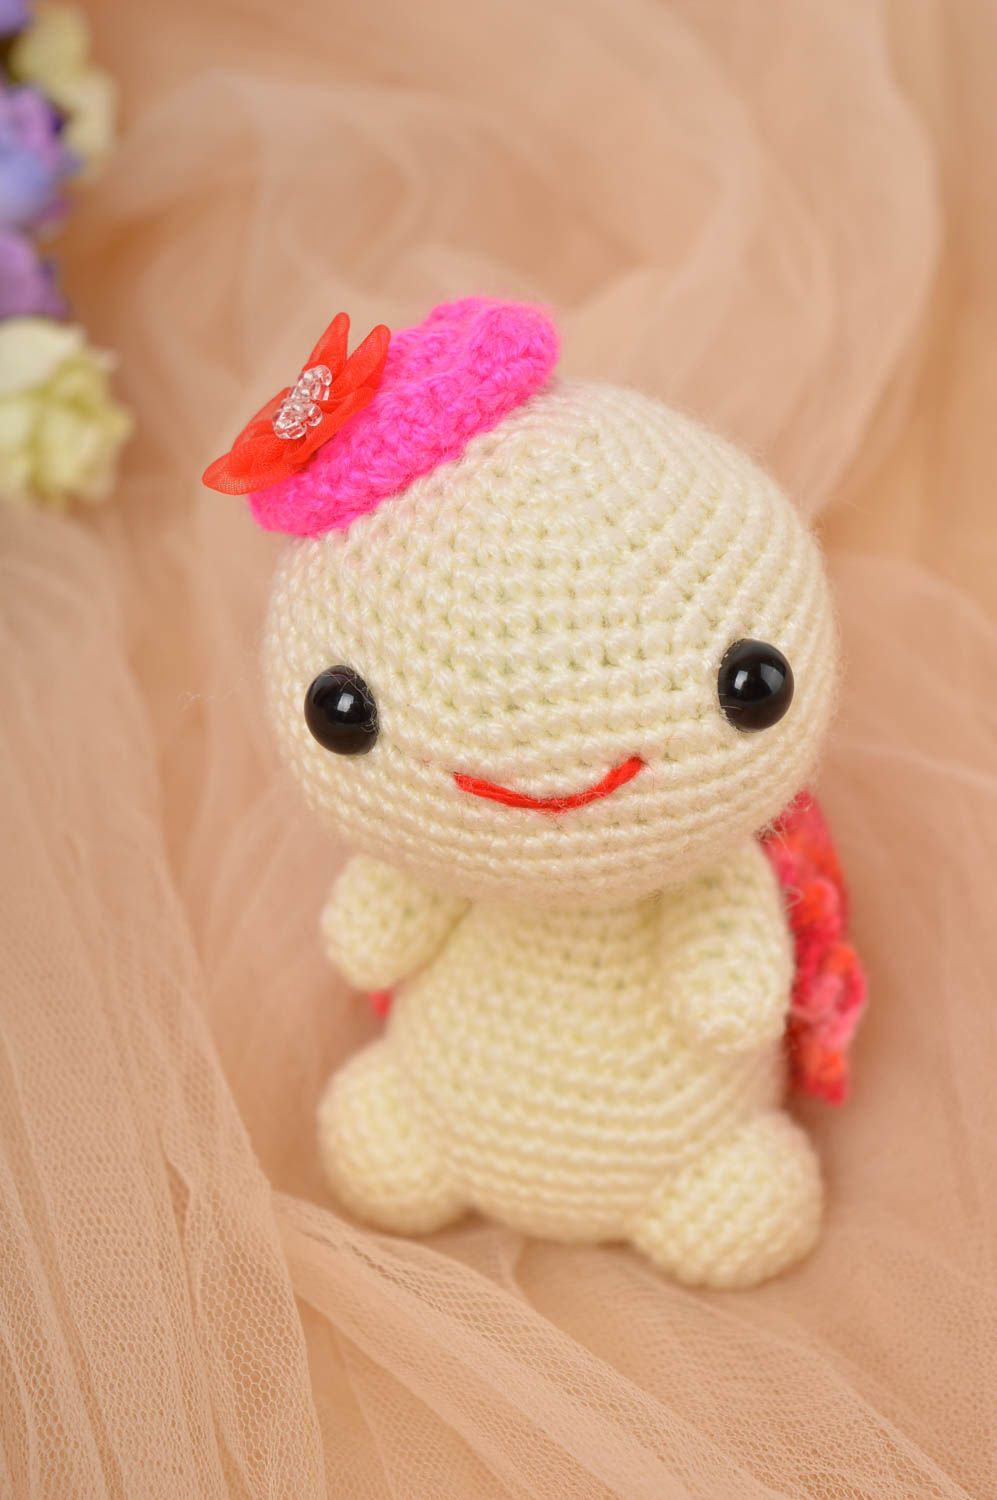 Designer beautiful toy handmade crocheted toy for babied nursery decor photo 1